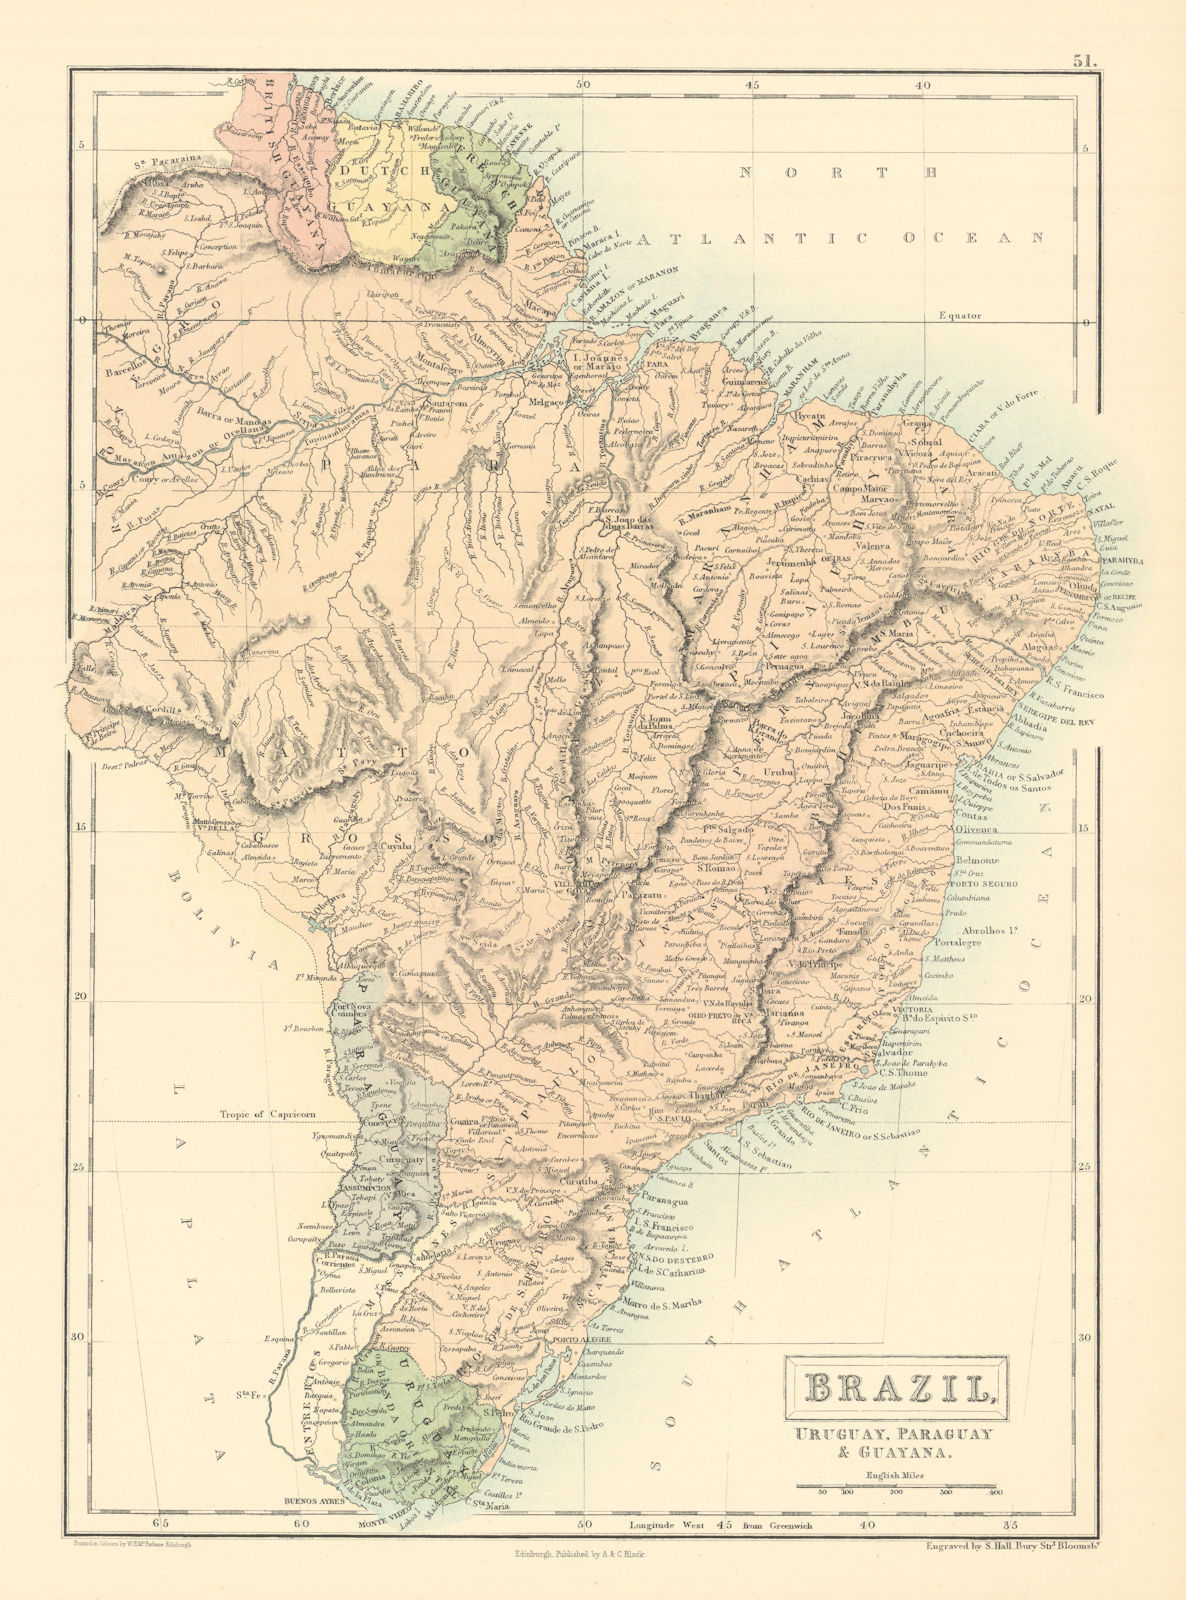 Brazil, Uruguay, Paraguay & Guayana. Guyanas. BARTHOLOMEW 1862 old antique map